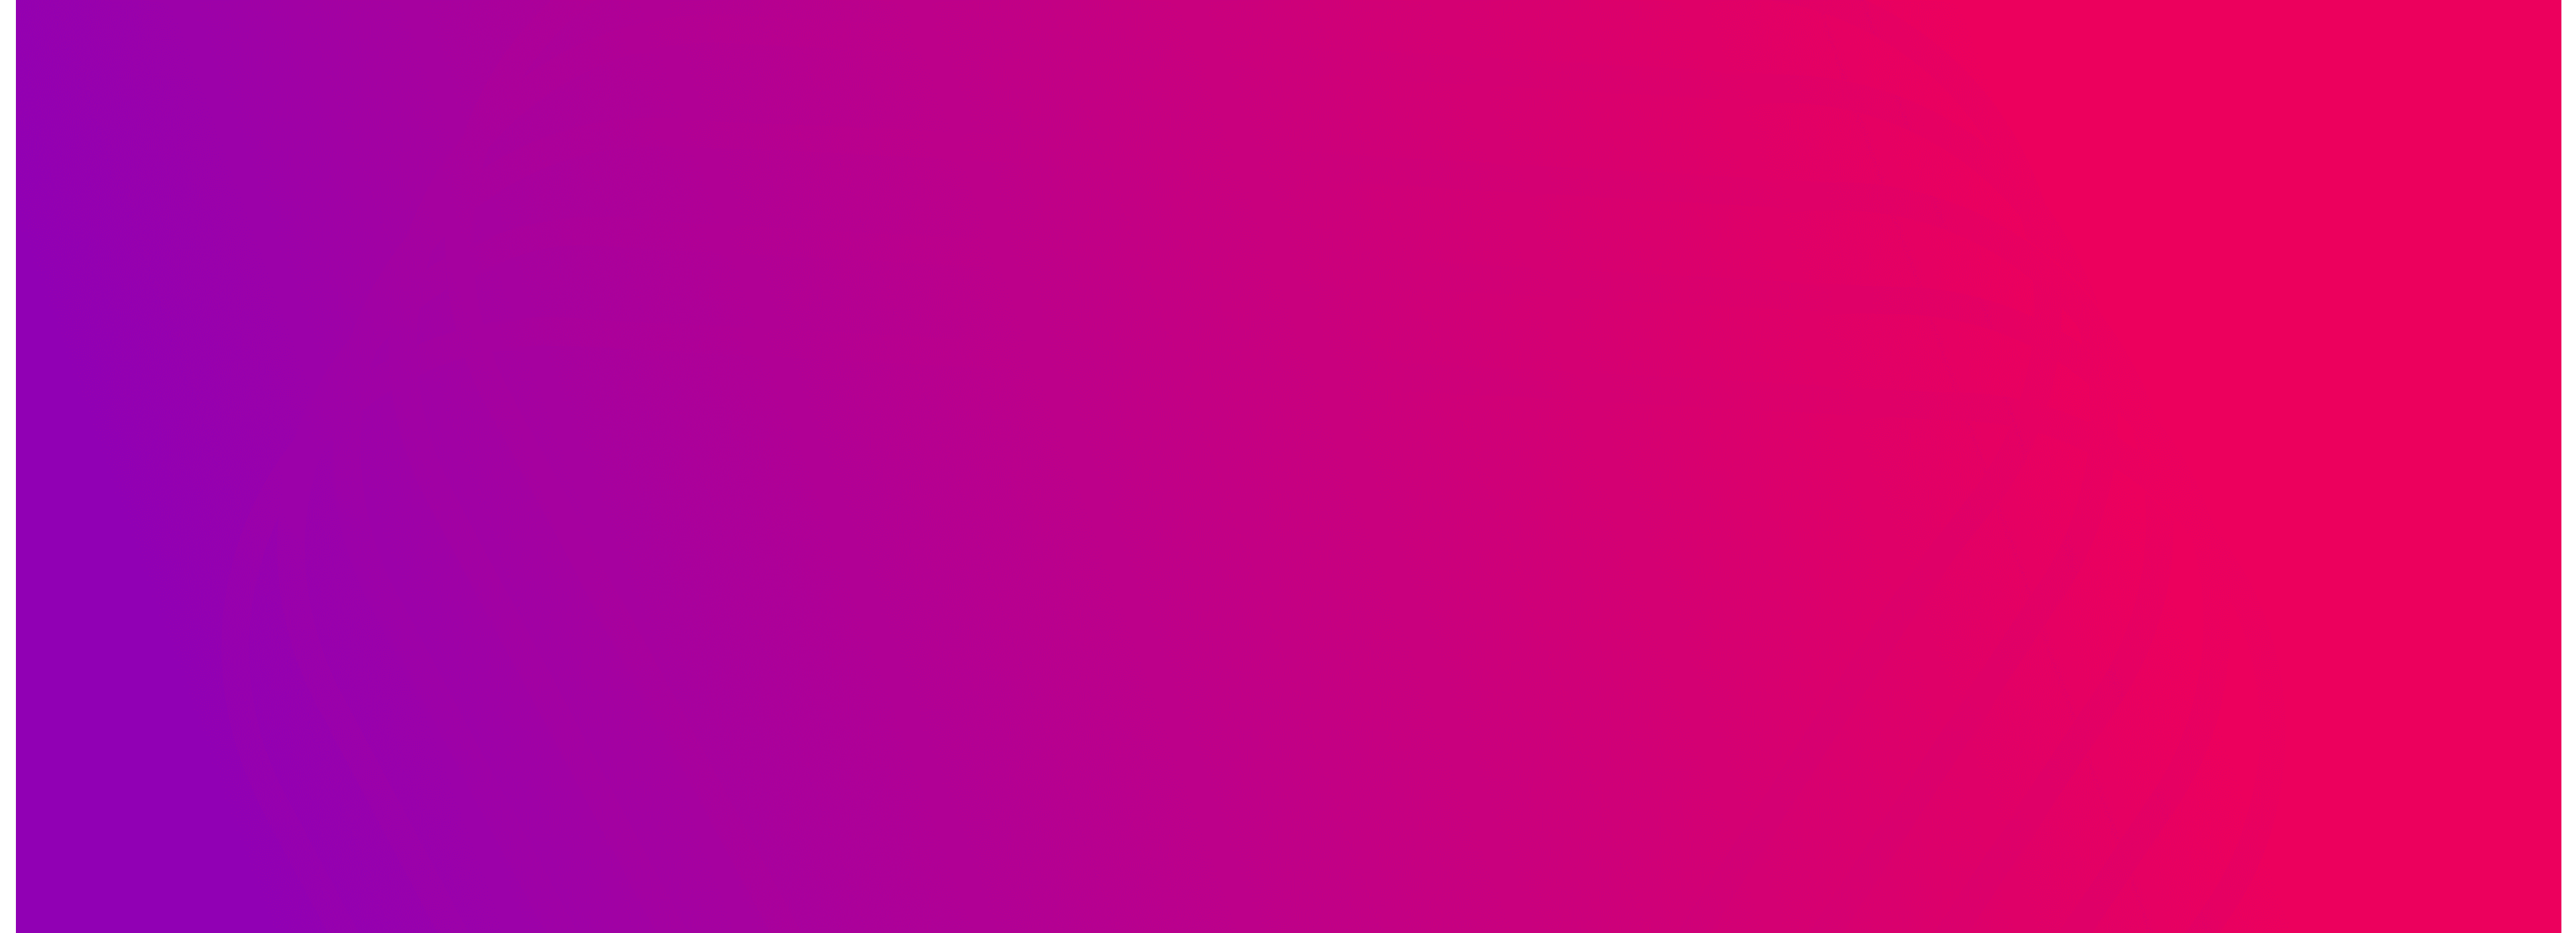 Fondo degradado púrpura/rosa con un tenue logotipo de Appear visible